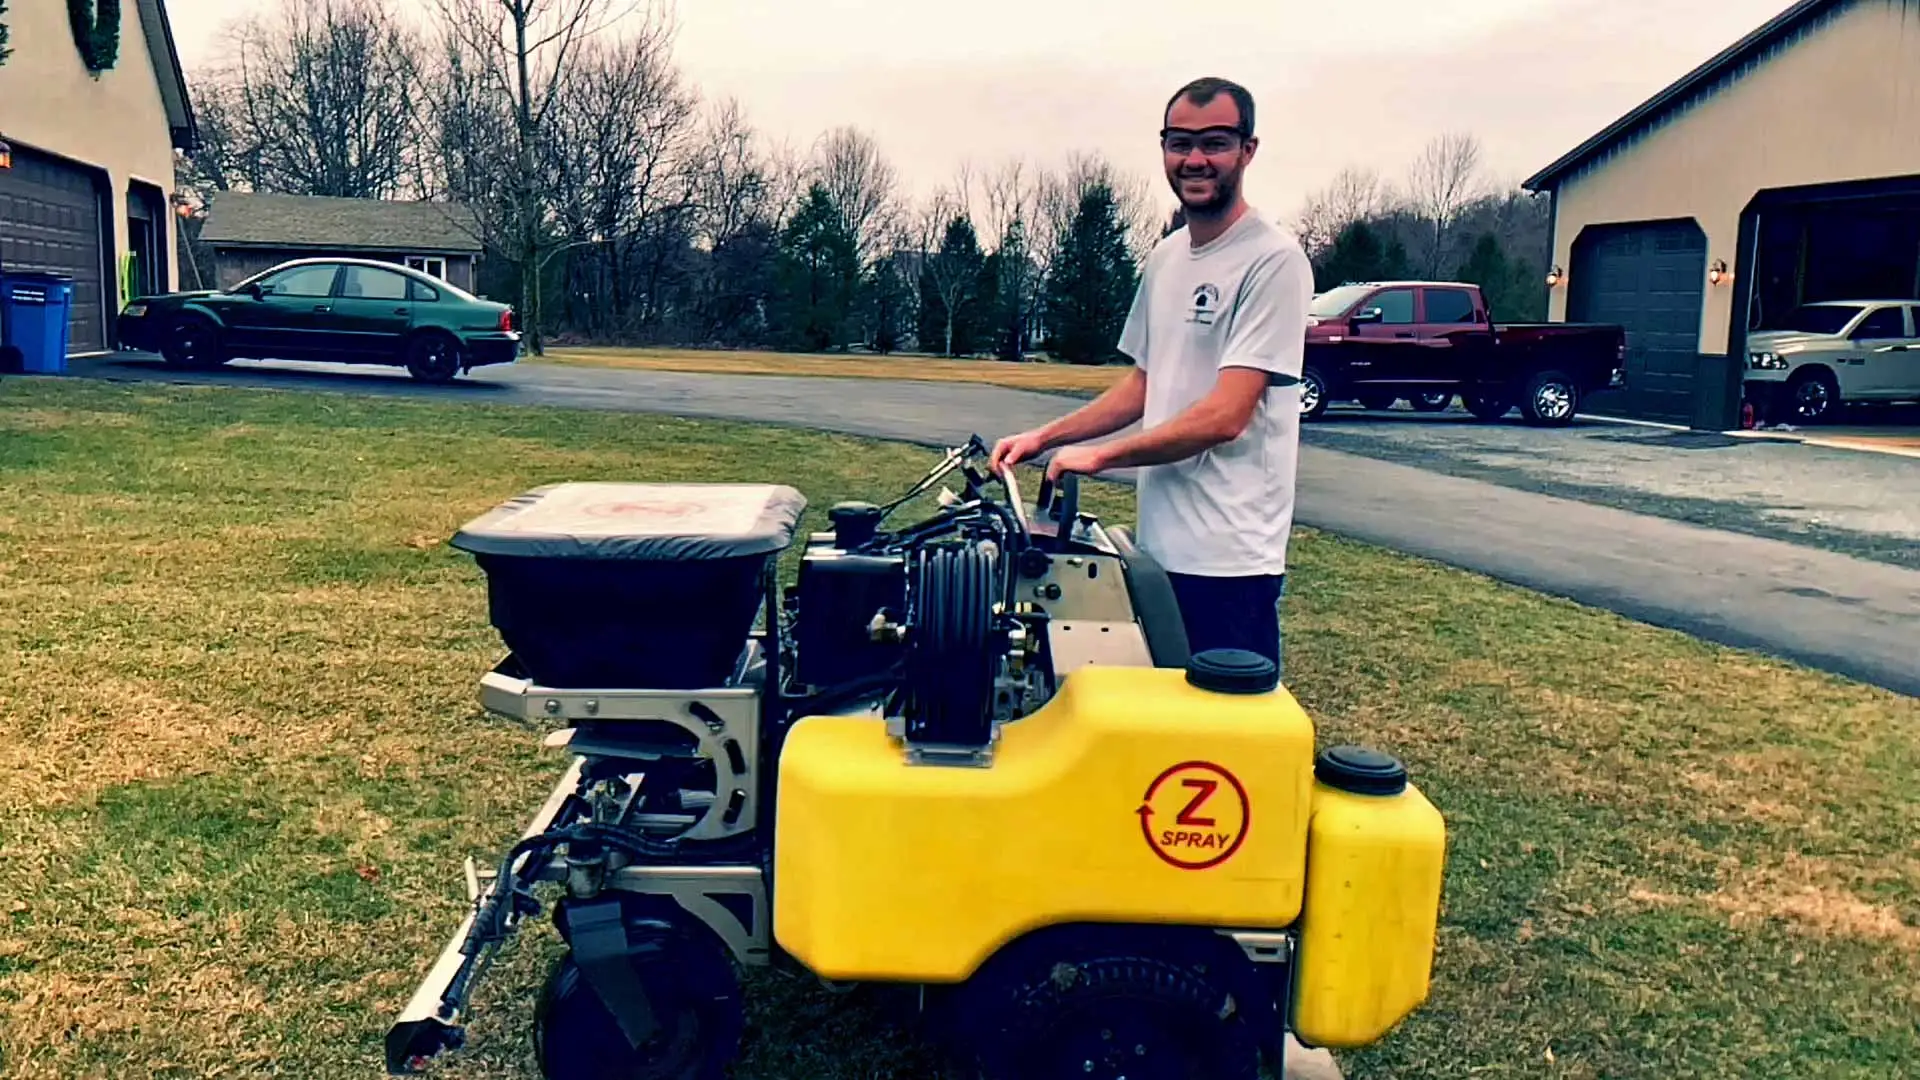 Fresh Cuts Lawn & Maintenance owner Austin Oldt using fertilization equipment in Allentown, PA.